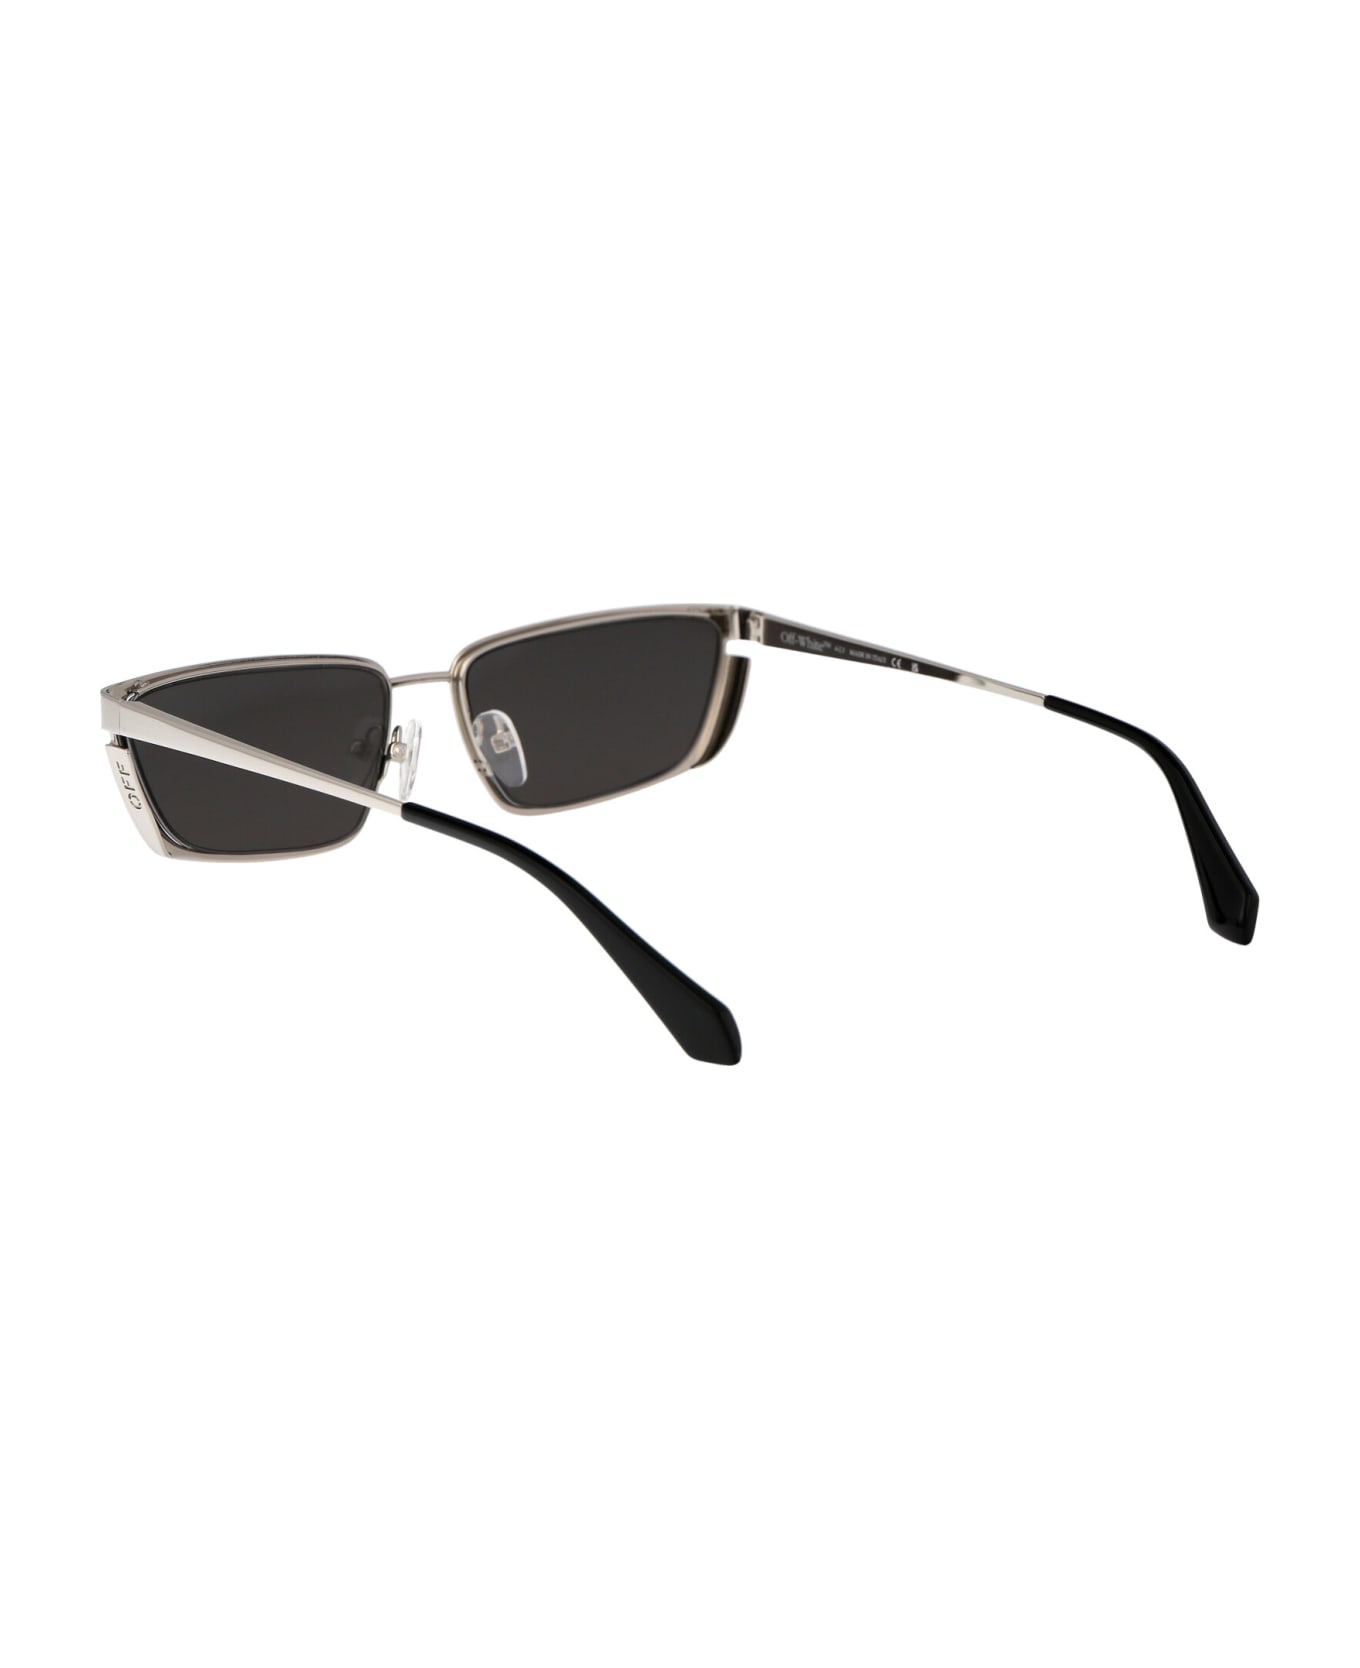 Off-White Richfield Sunglasses - 7207 SILVER